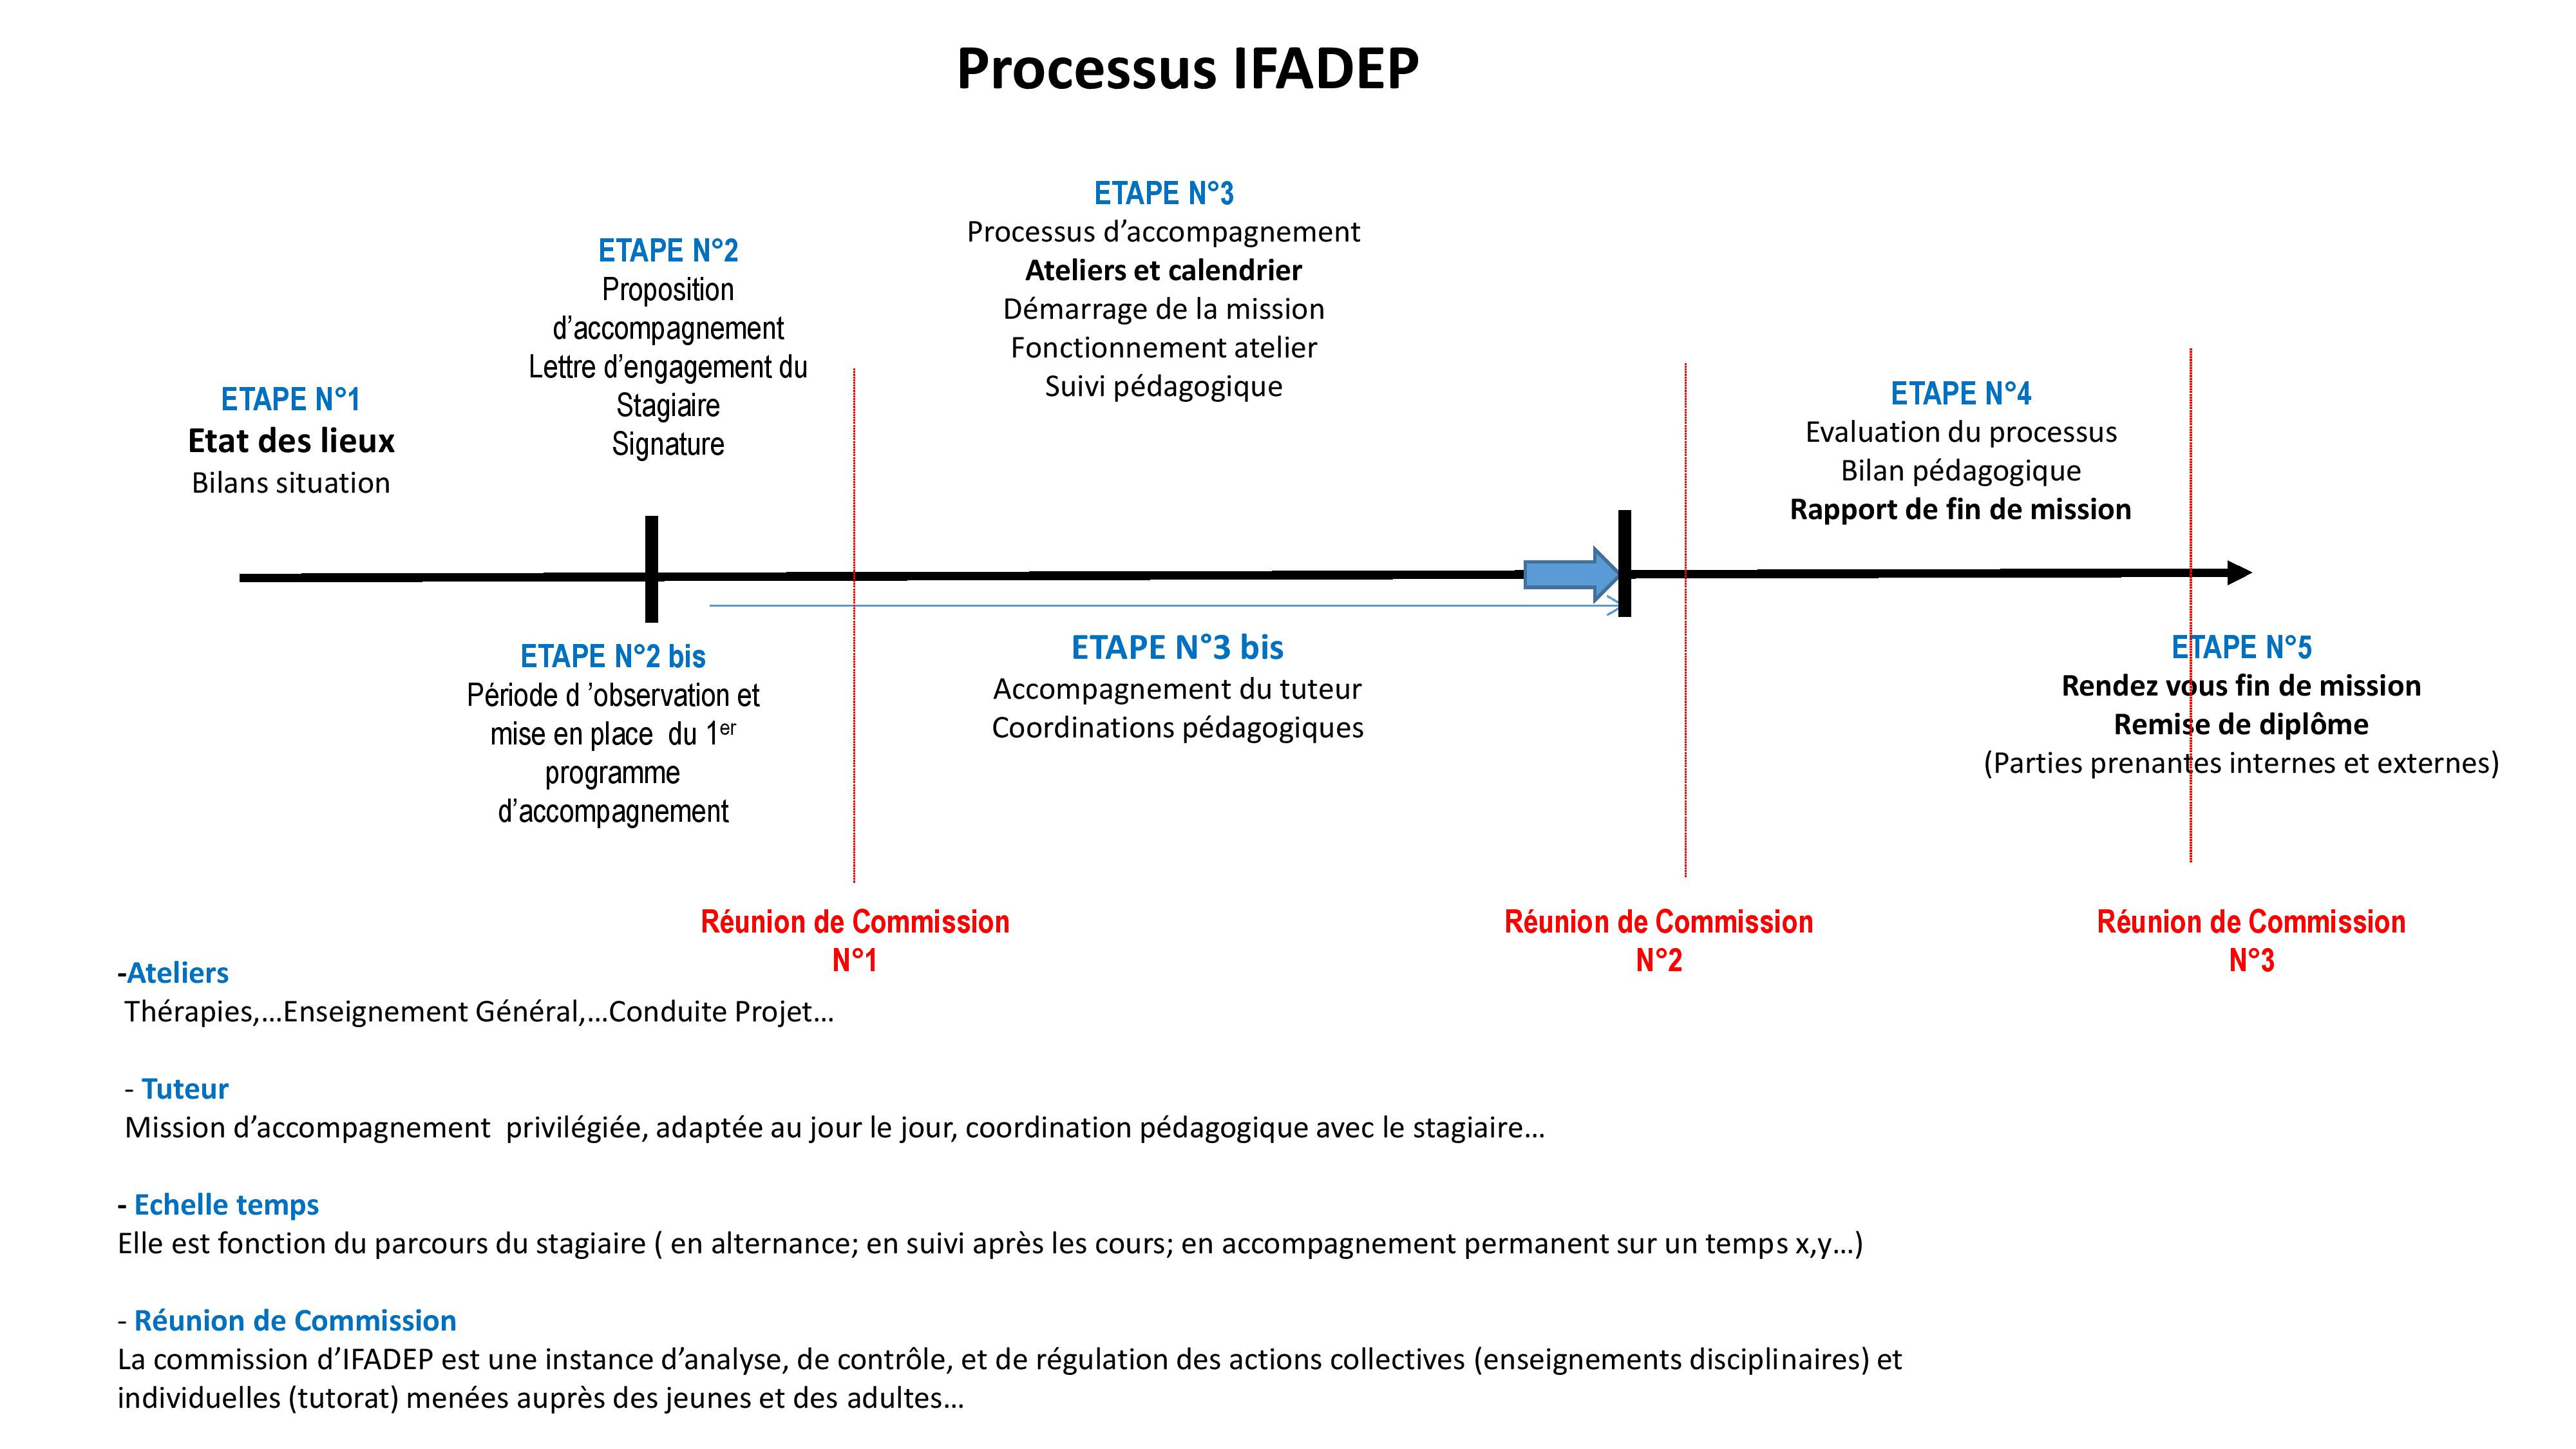 Processus détaillé IFADEP